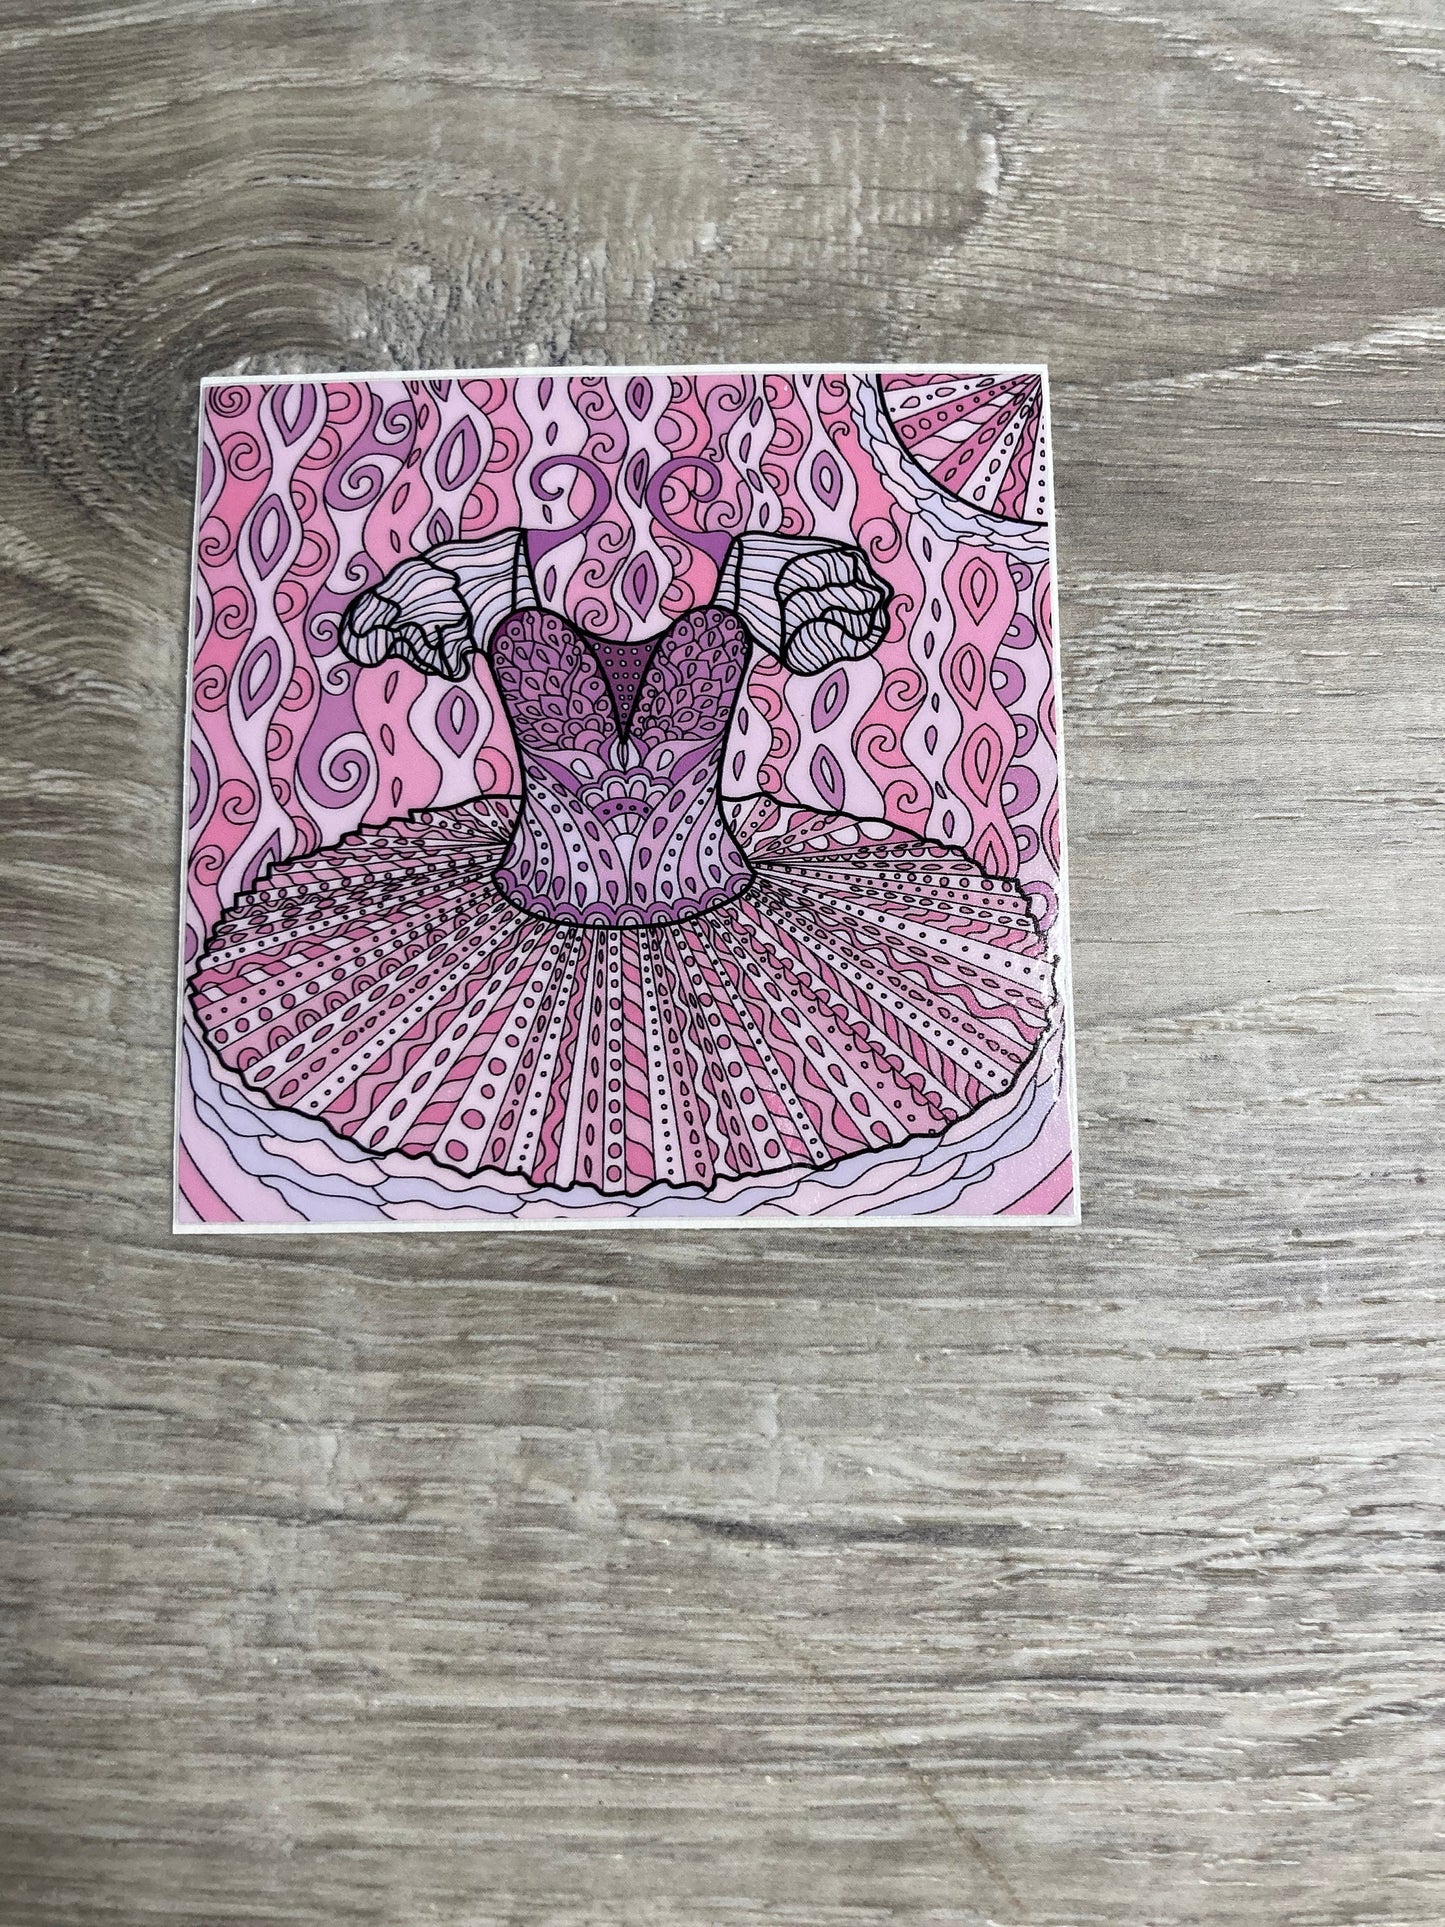 Tutu Dance Hologram Vinyl Sticker, Vinyl Decal, Laptop Sticker, Dance Sticker, Gifts For Dancers, Ballet Gifts